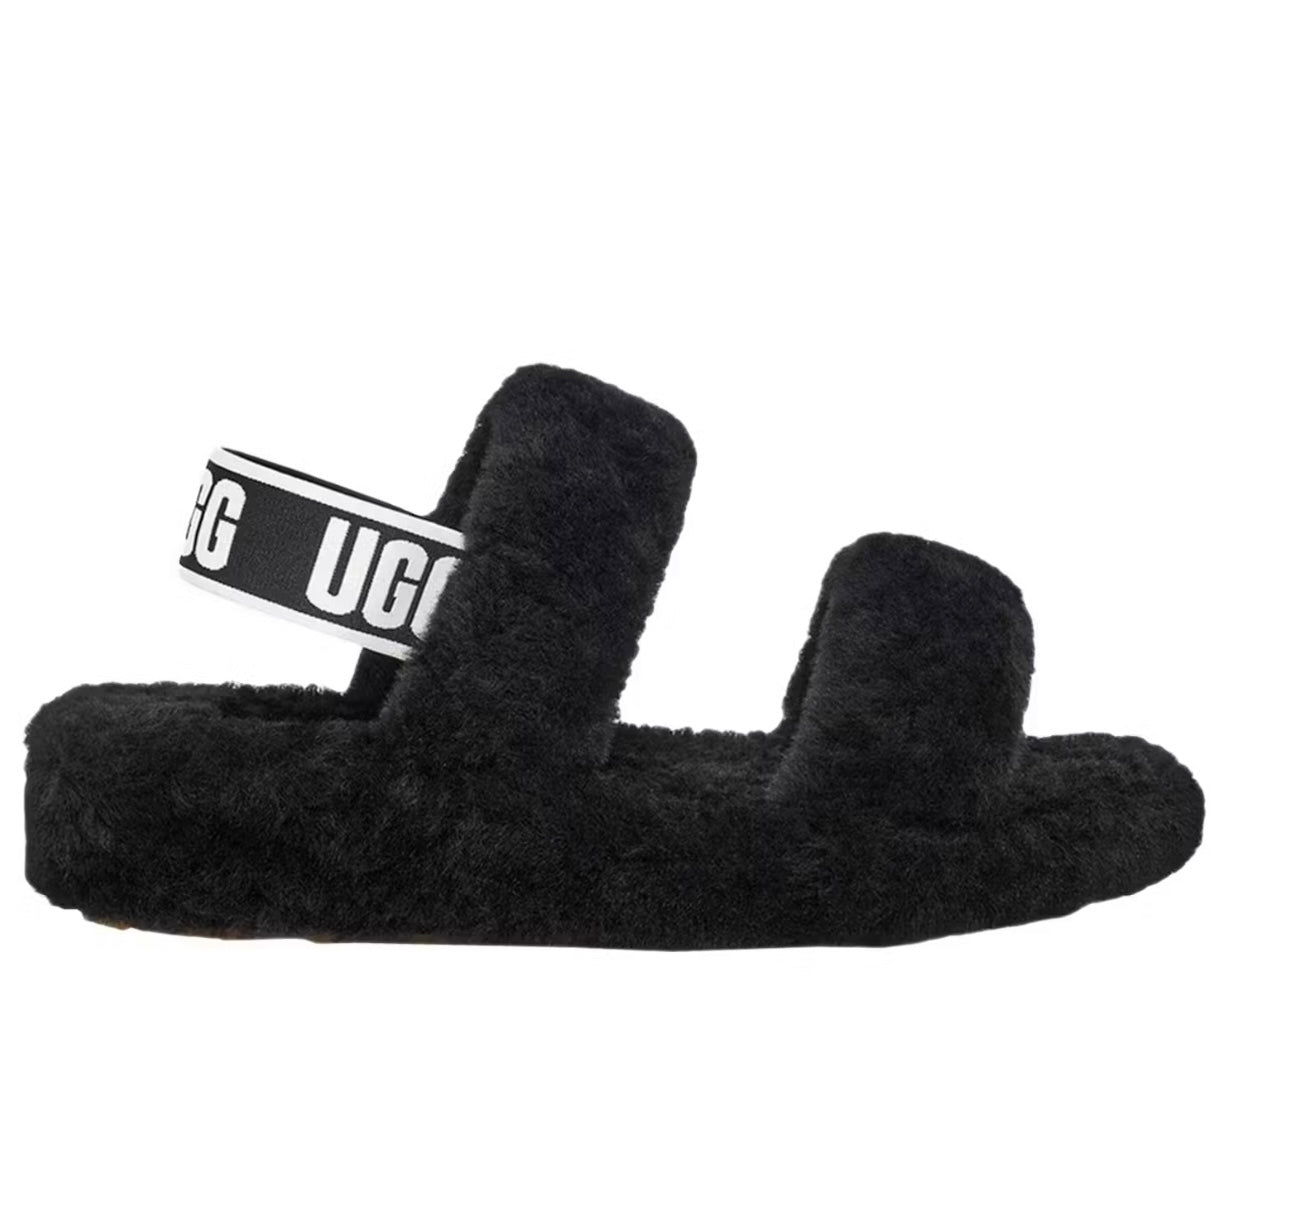 Ugg slippers black